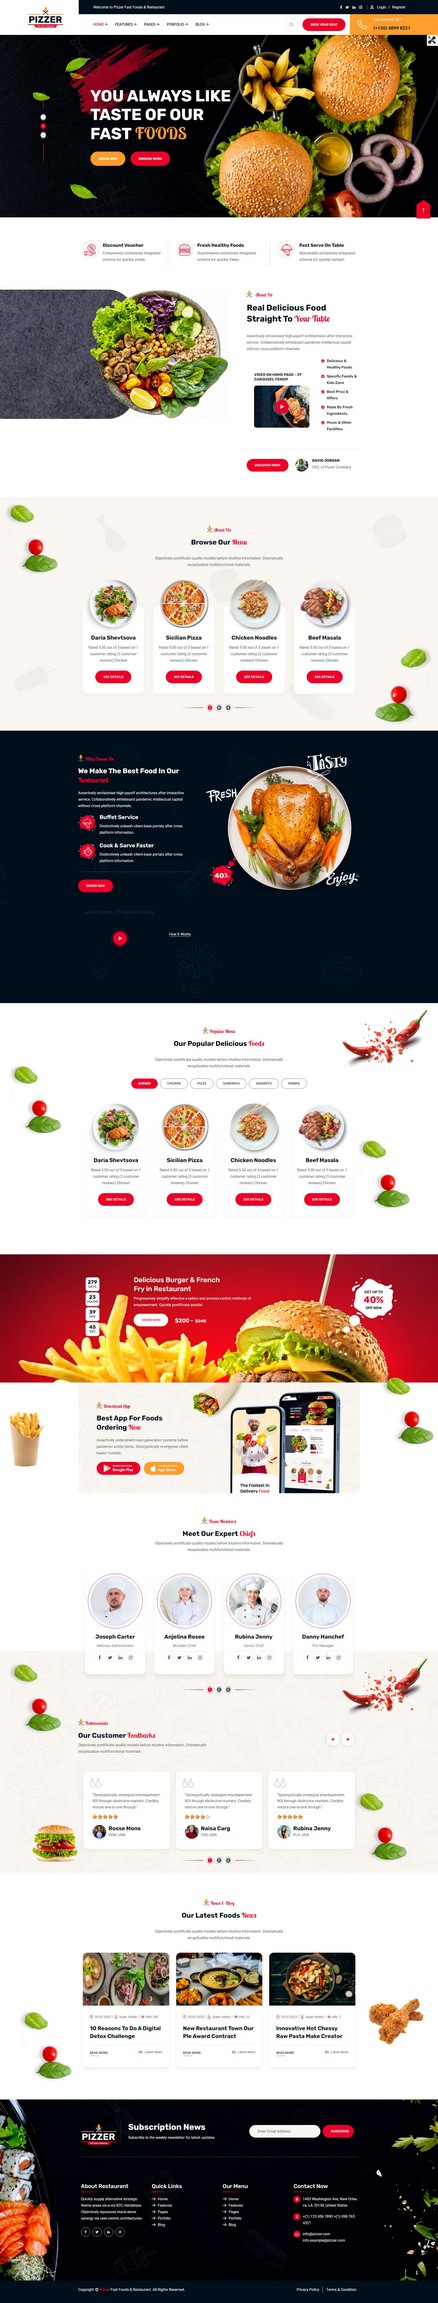 Pizzer - Fast Food & Restaurant Joomla 4 Template